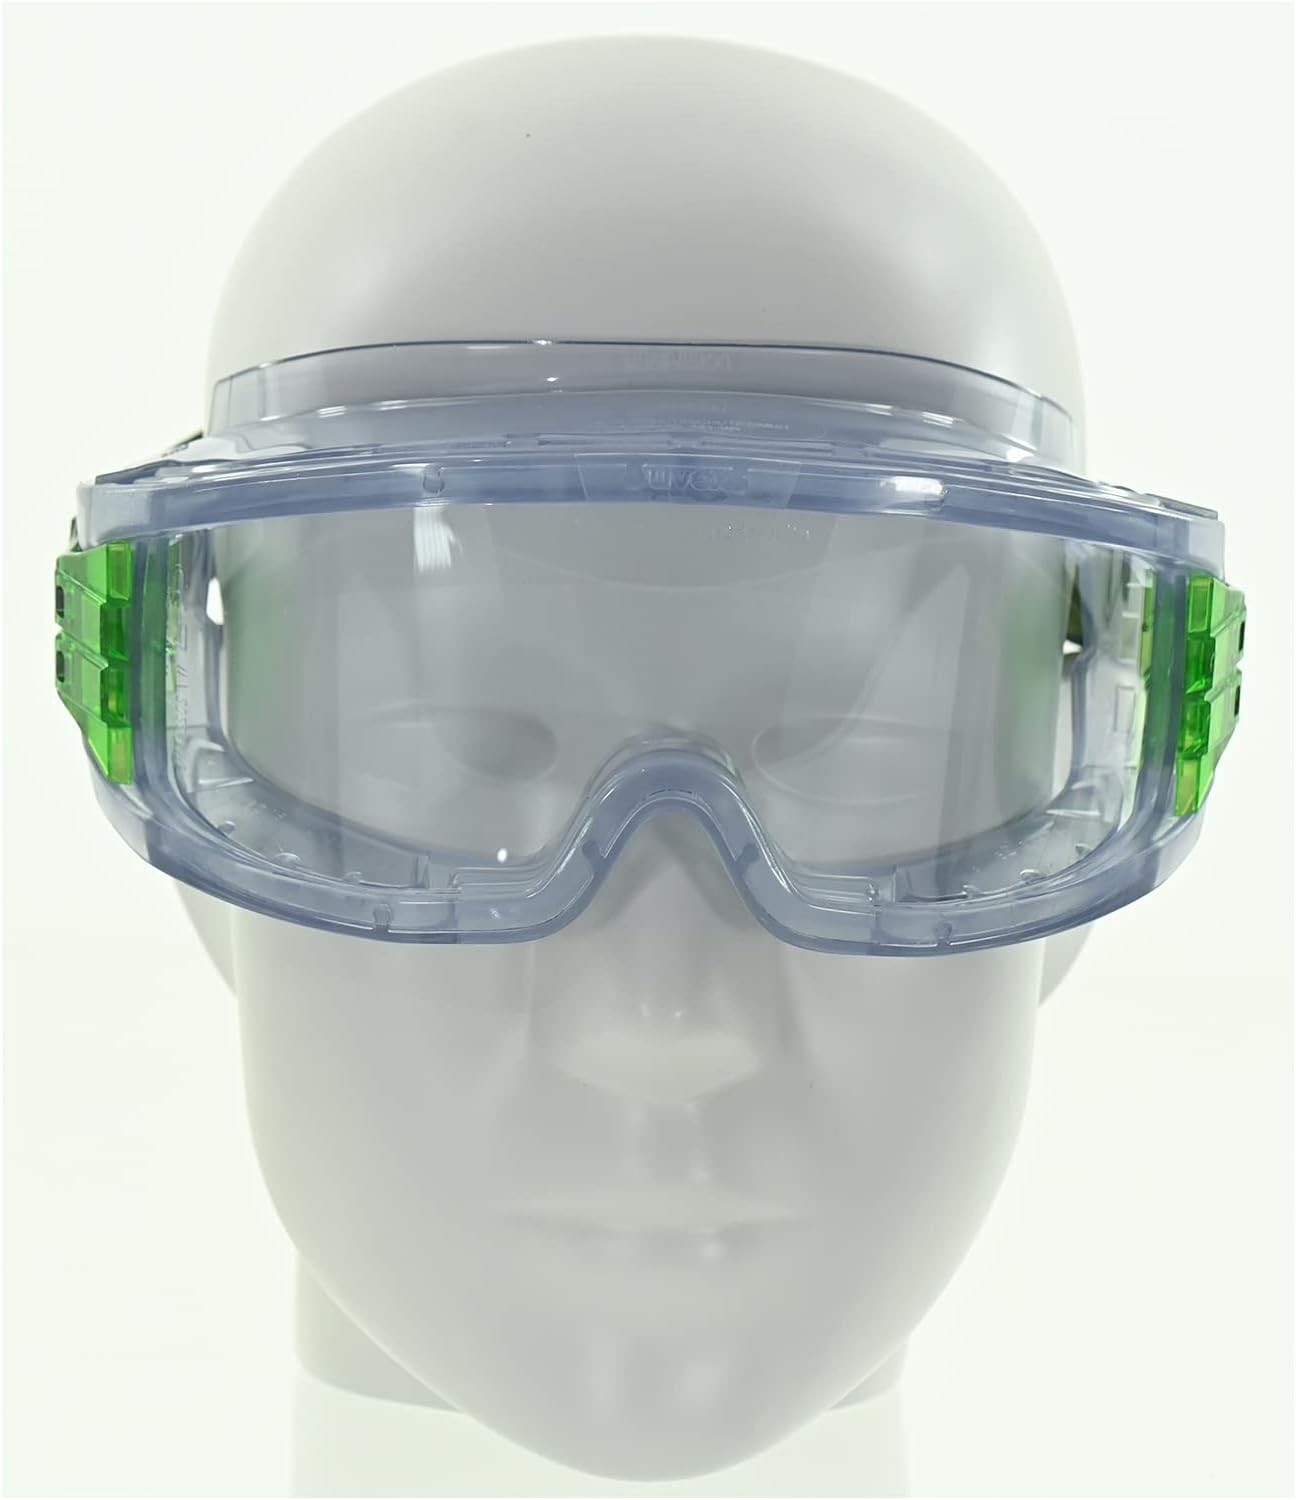 Uvex Ultravision Goggle Glasses